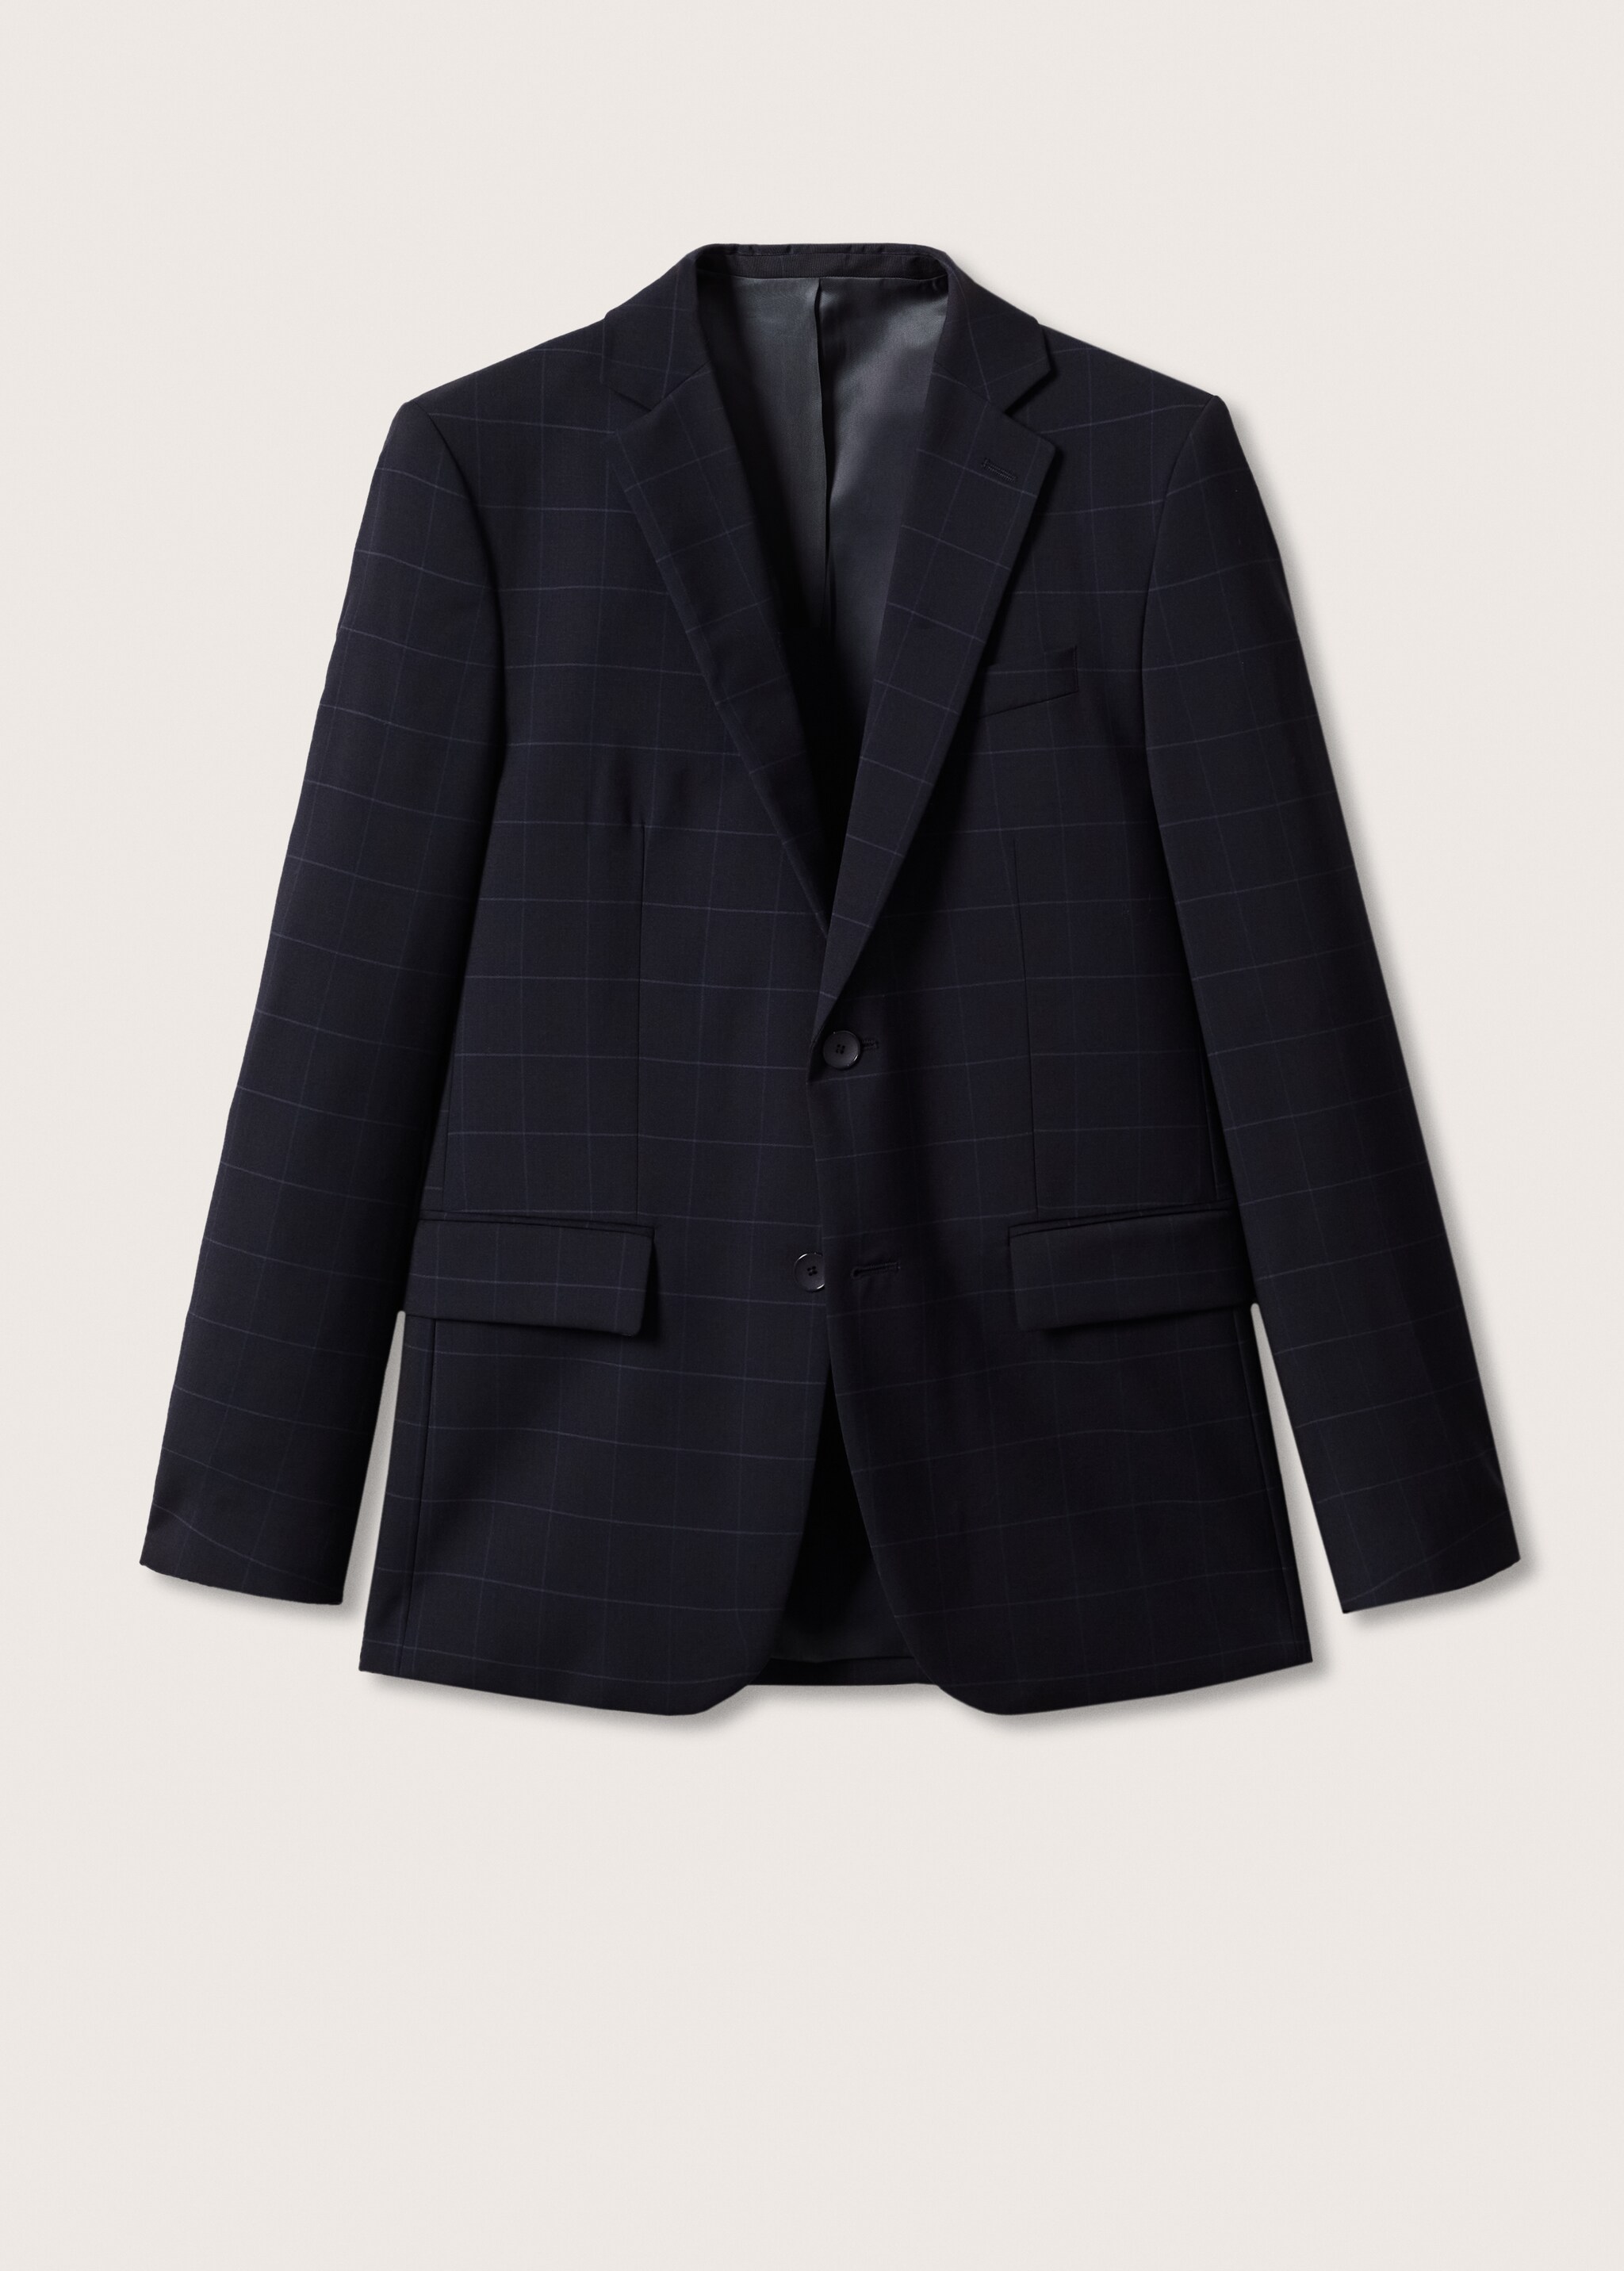 Slim fit virgin wool suit blazer - Article without model